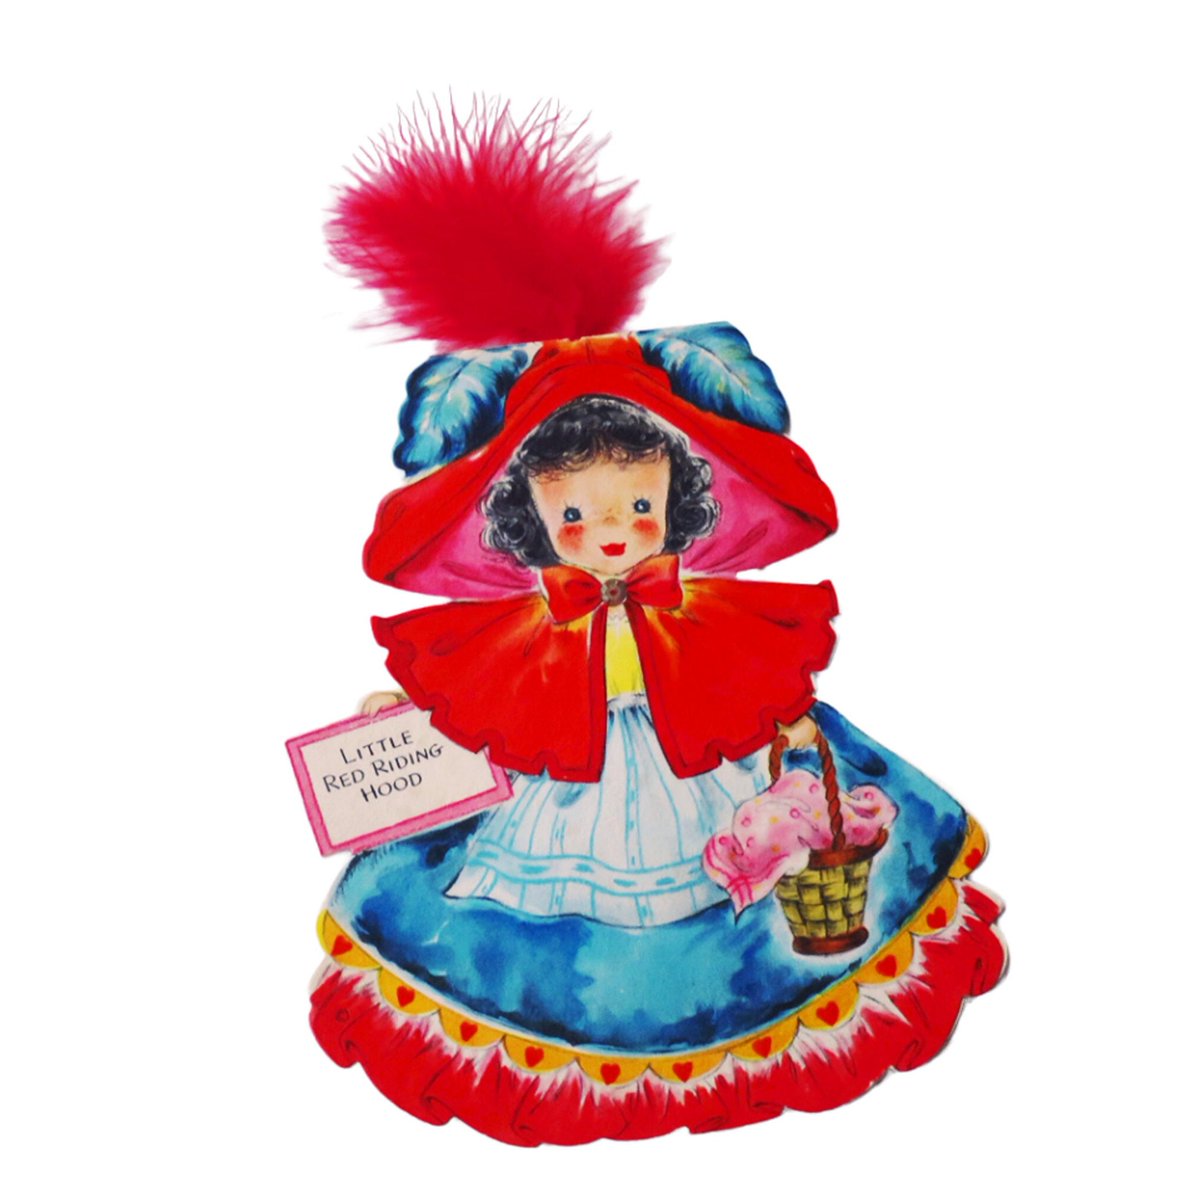 1940s Hallmark Dolls Little Red Riding Hood Die Cut Card, Doll Card No 5 tuppu.net/68eea3cf #EtsyteamUnity #SMILEtt23 #Vintage4Sale #MomDay2024